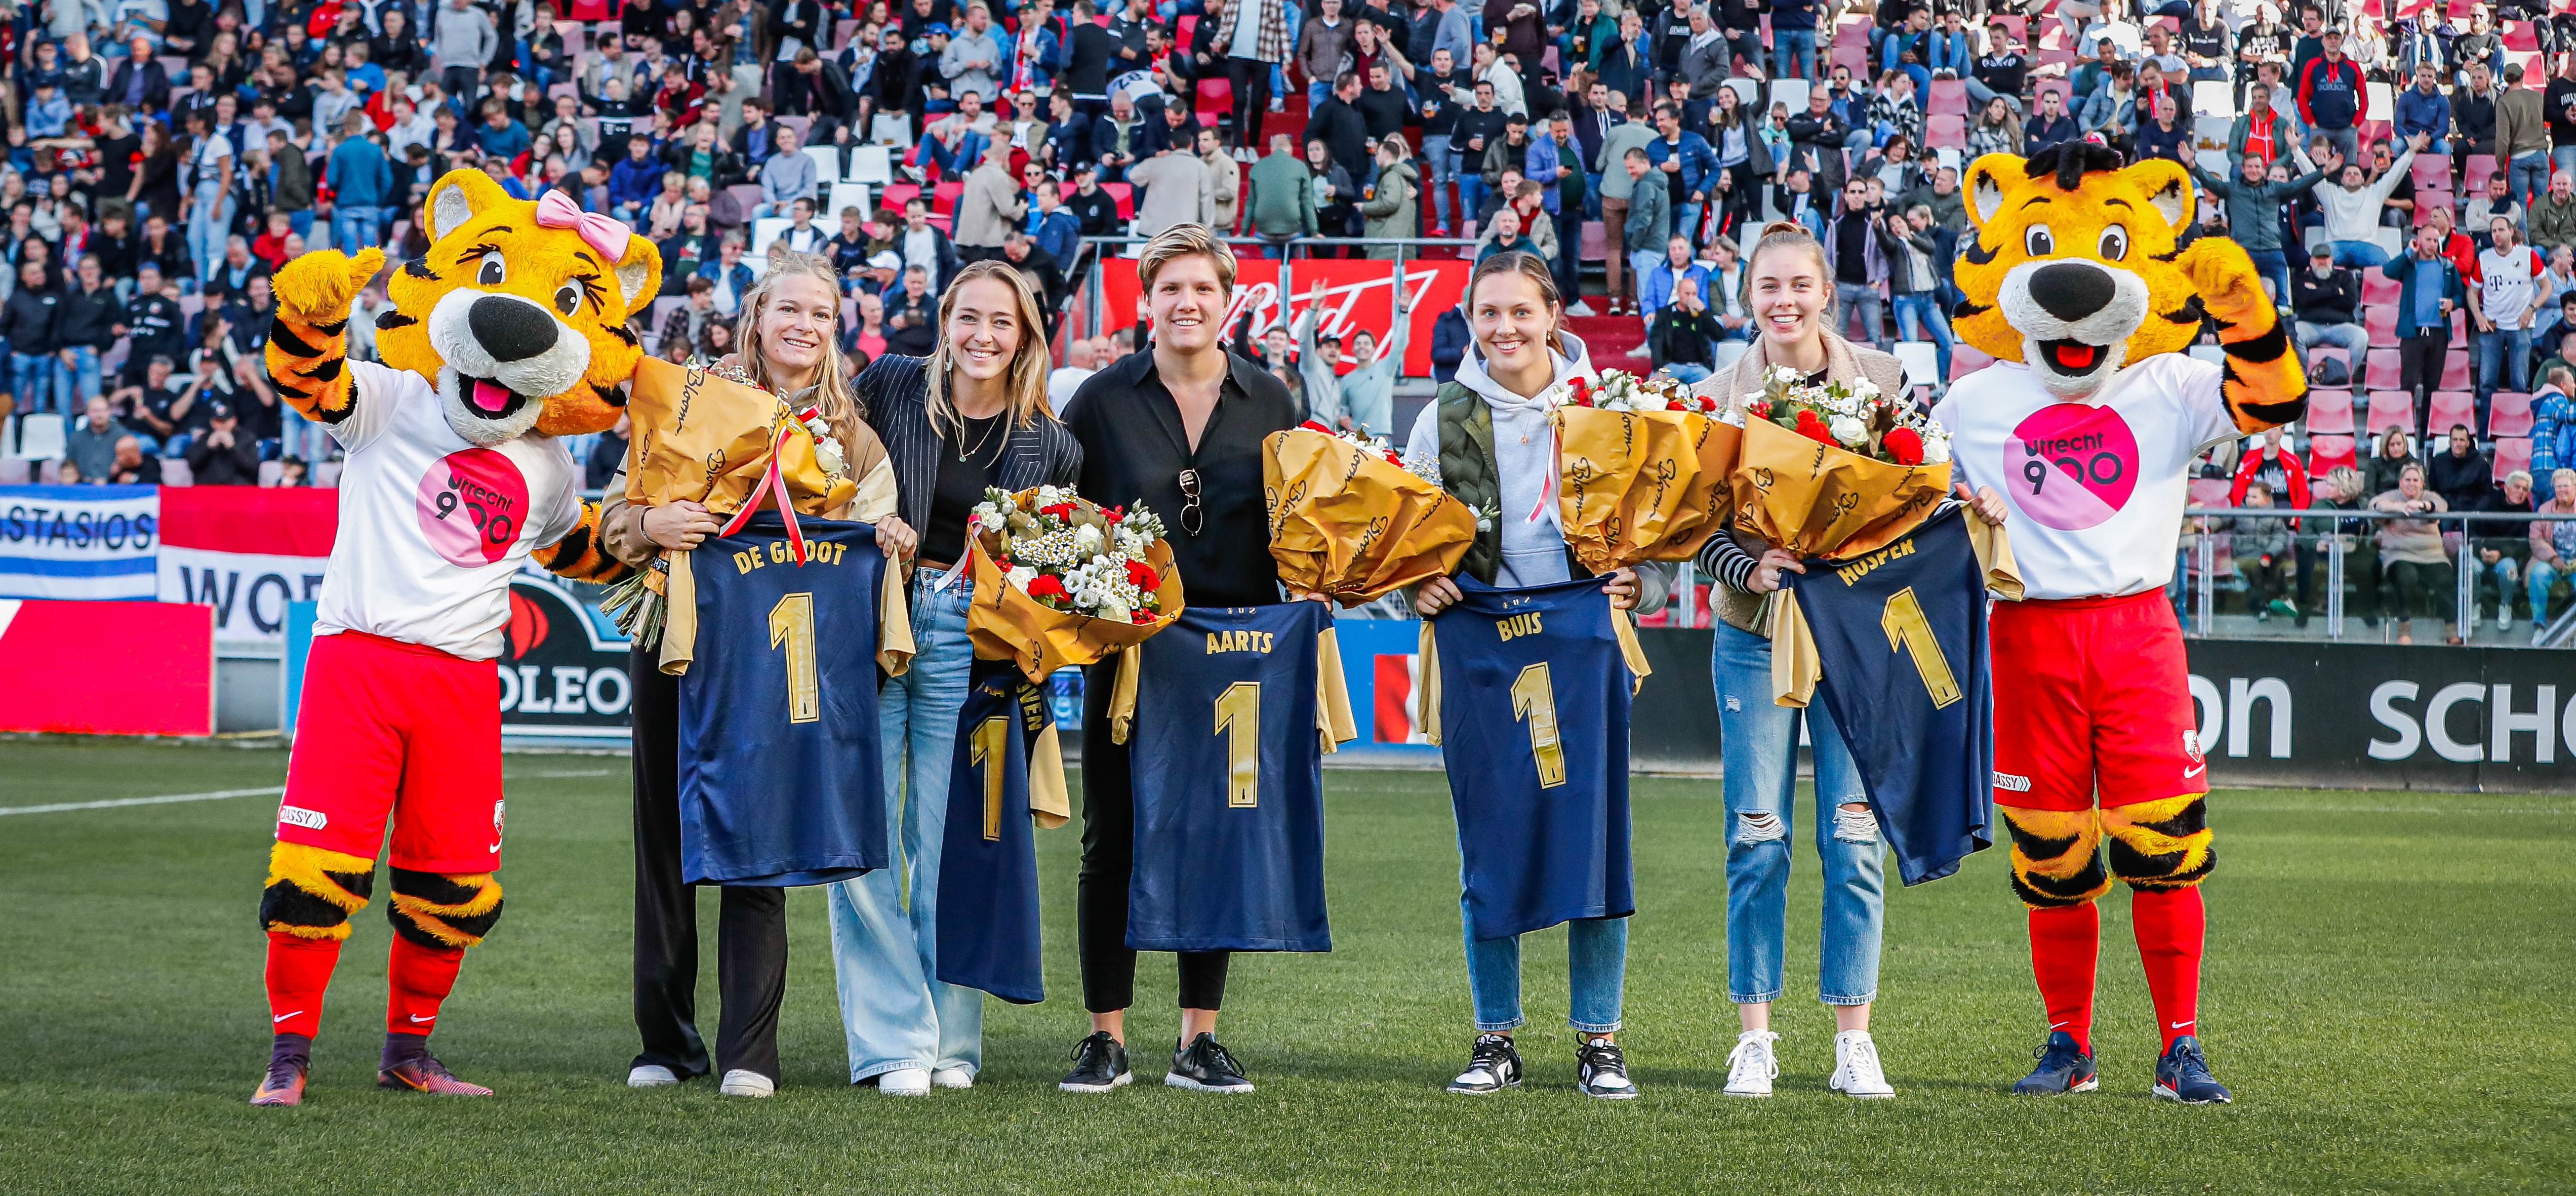 Utrechtse atleten gehuldigd tijdens FC Utrecht - AZ